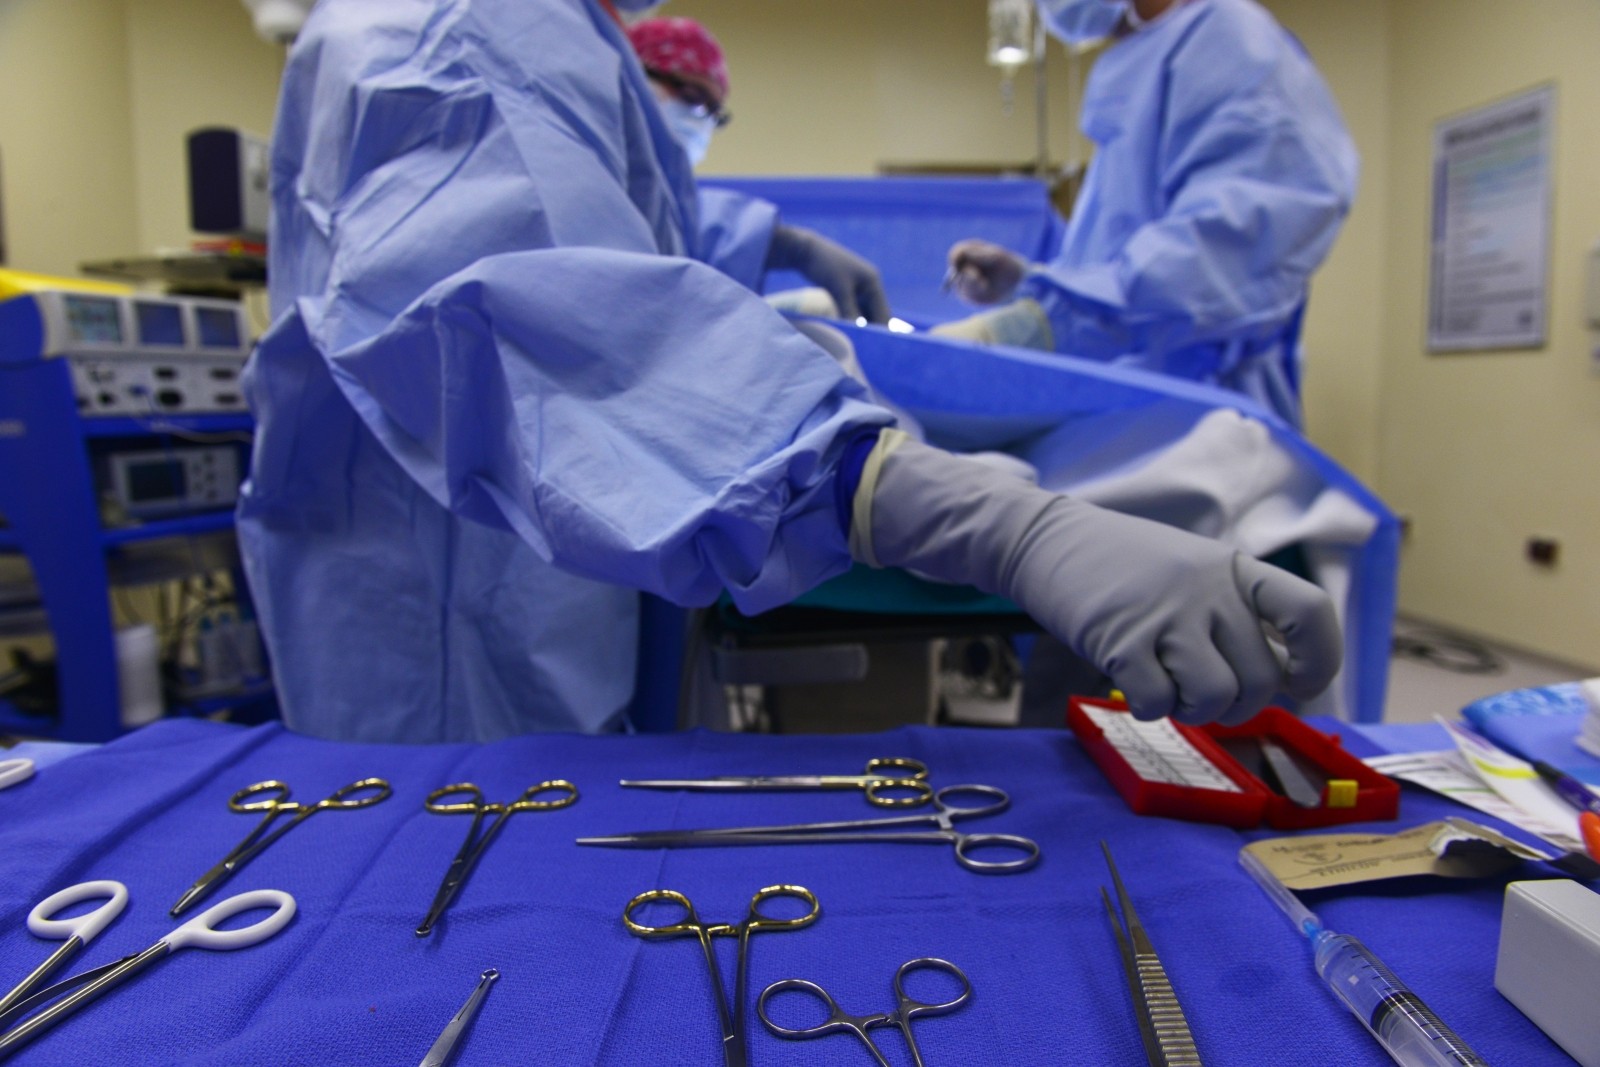 surgery-instruments-surgeons-operation-medical